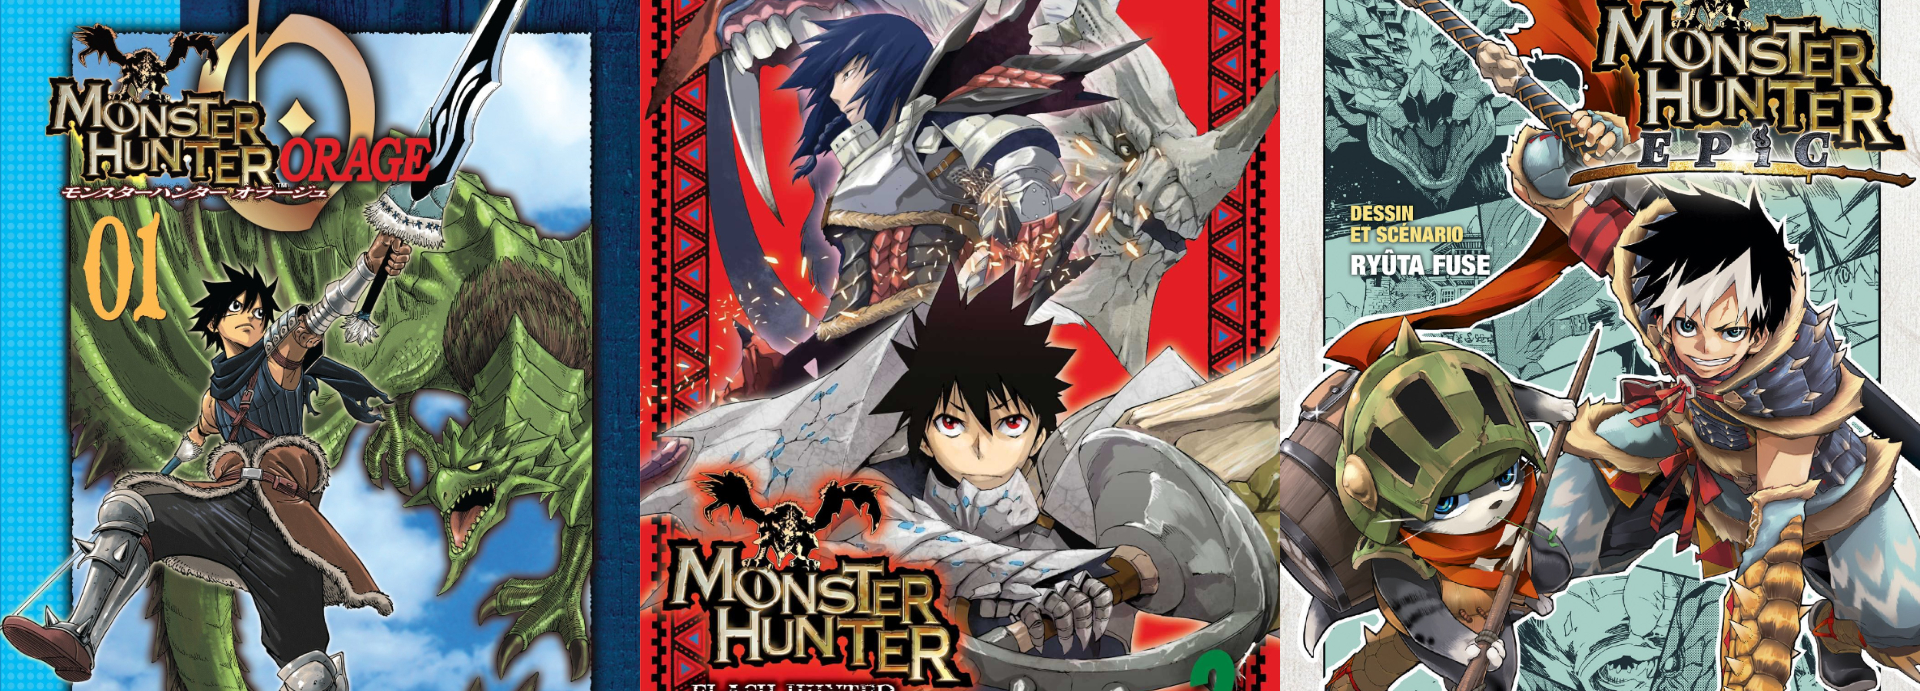 Do We Need A Monster Hunter Anime? - Anime Corner